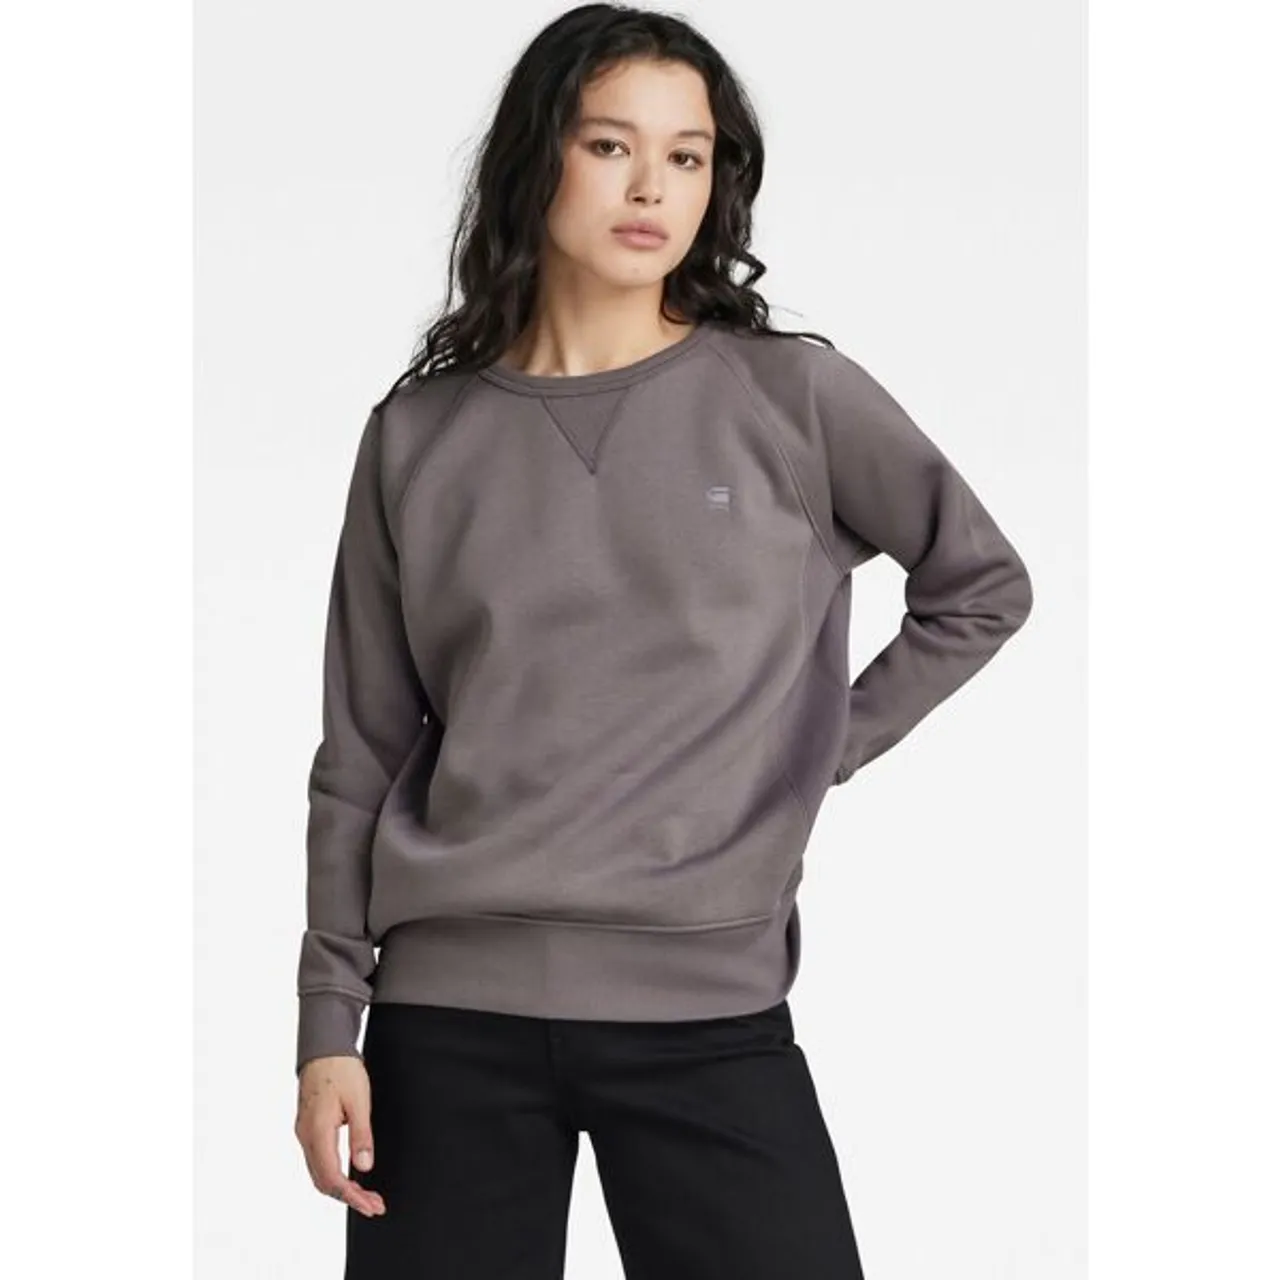 Sweatshirt G-STAR RAW "Premium core 2.0" Gr. S (36), grau (rabbit) Damen Sweatshirts